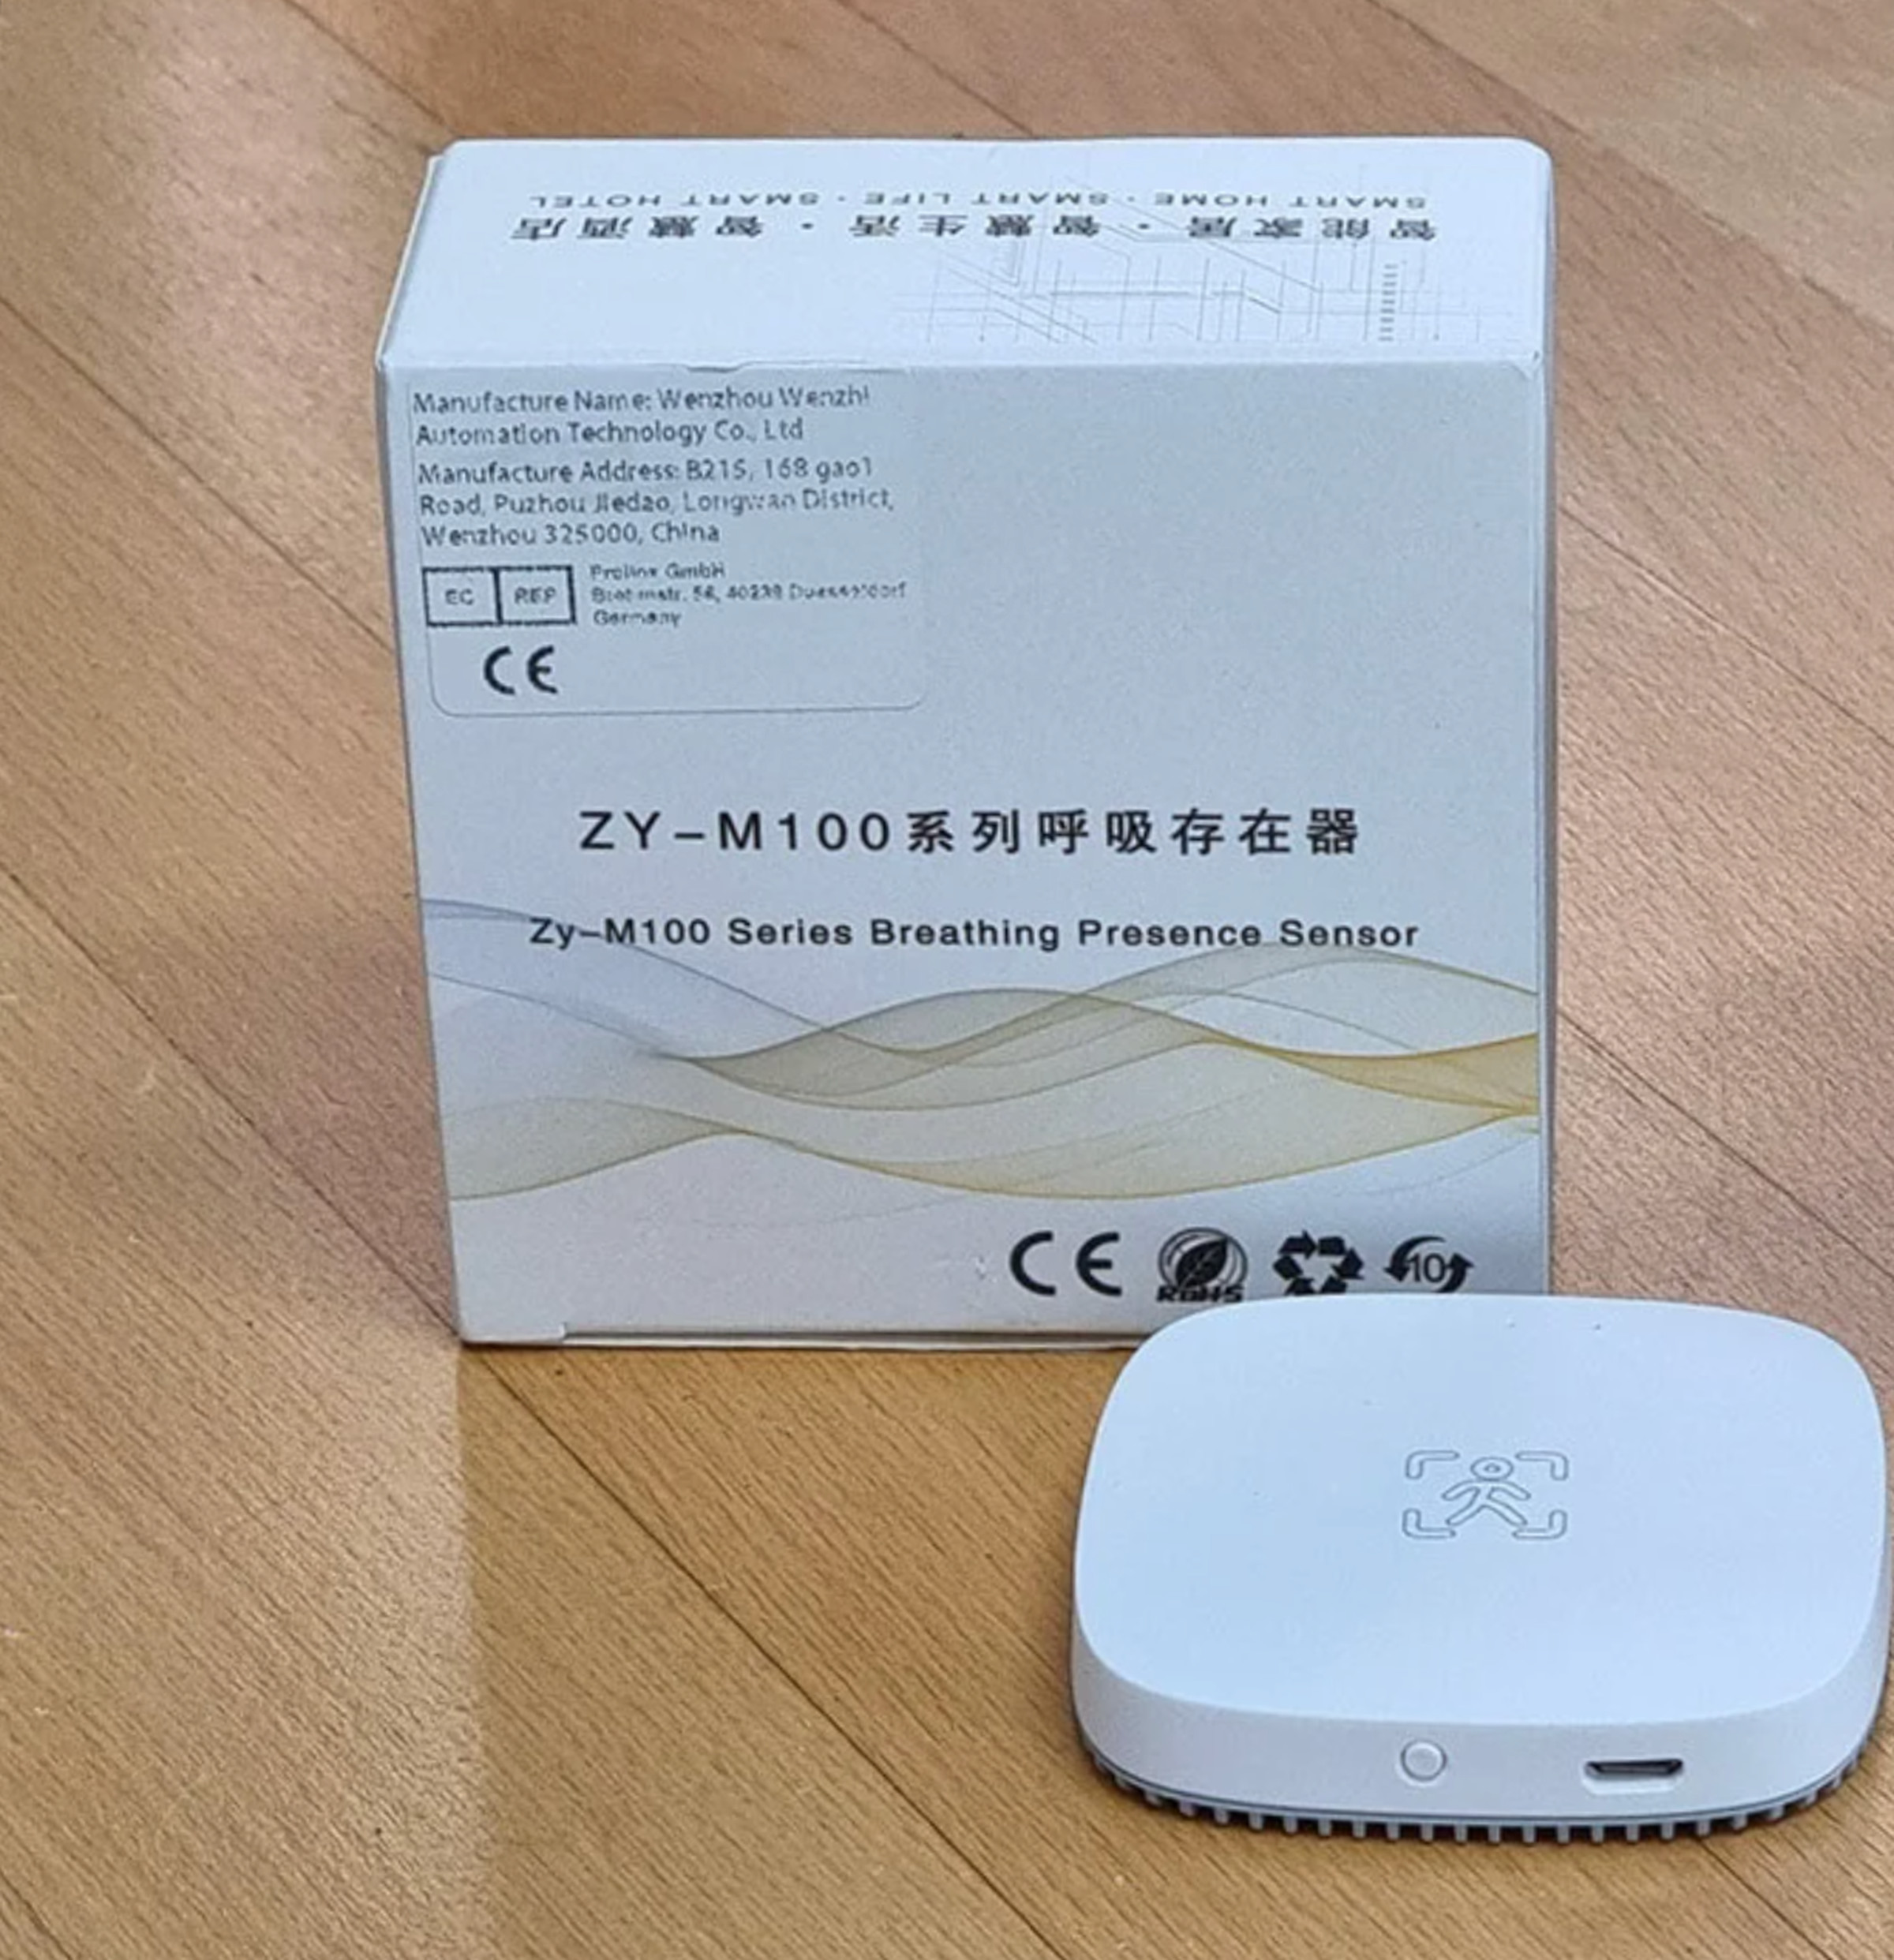 Box and small white sensor.